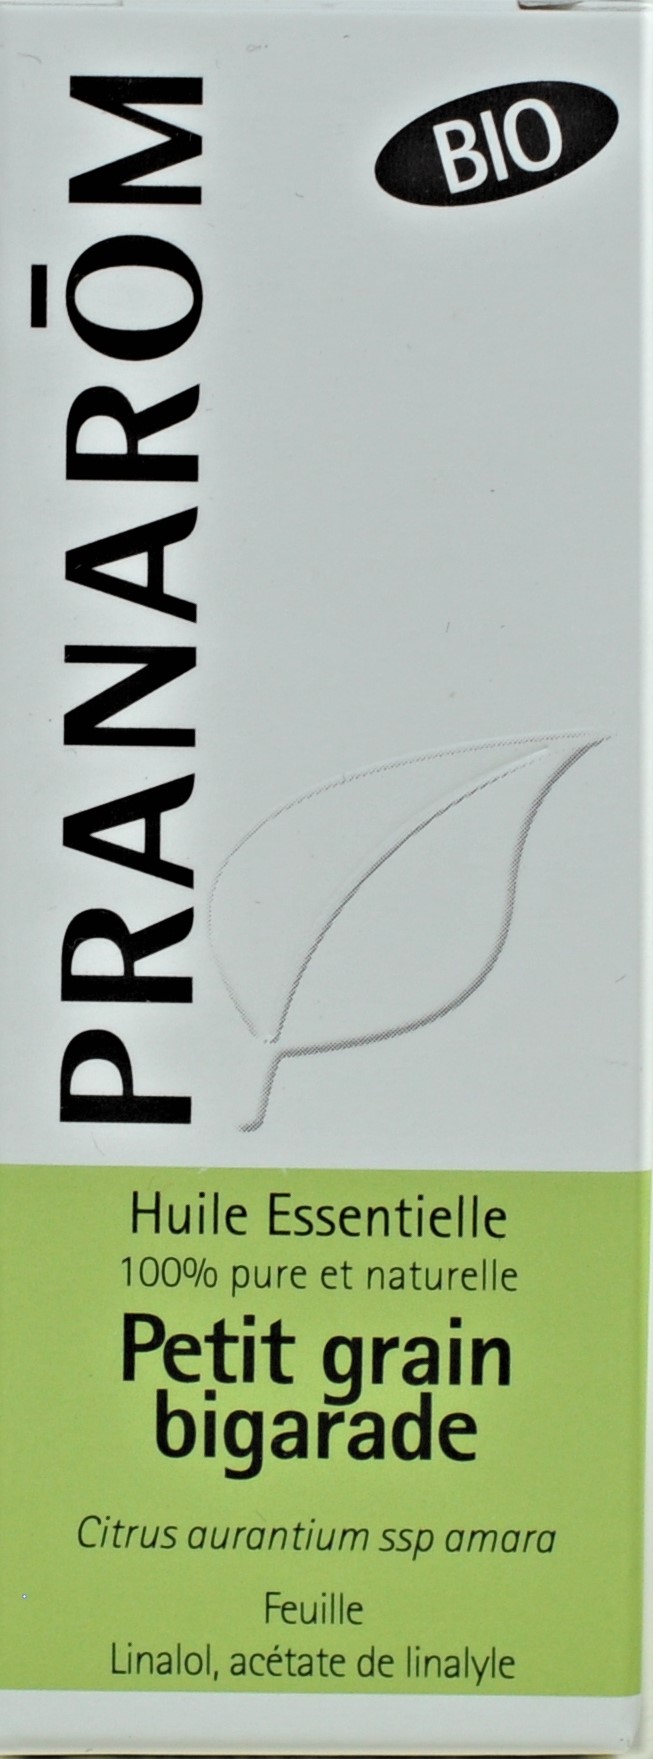 Huile essentielle Petitgrain bigarade par Pranarom Aromathérapie